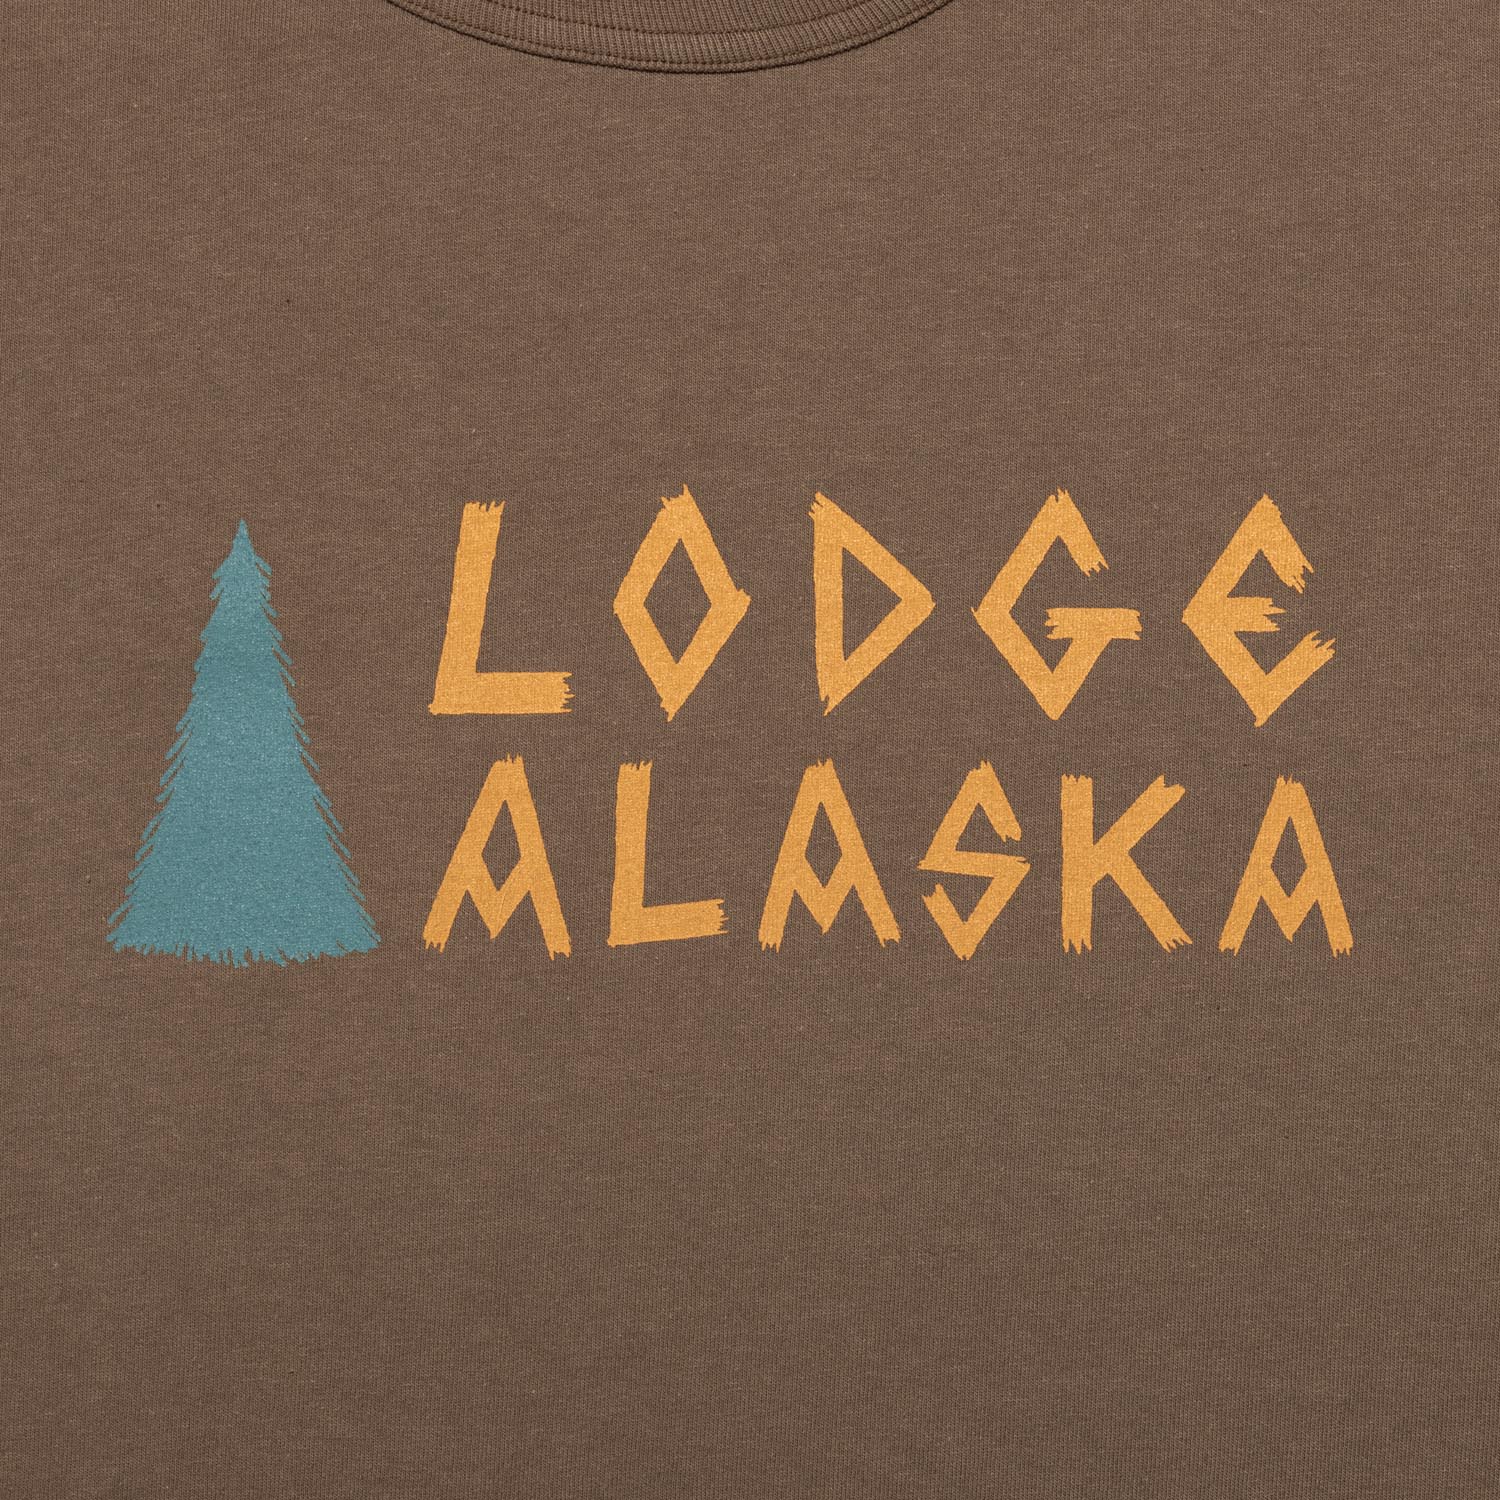 Lodge ALASKA Tee designed by Matt Leines